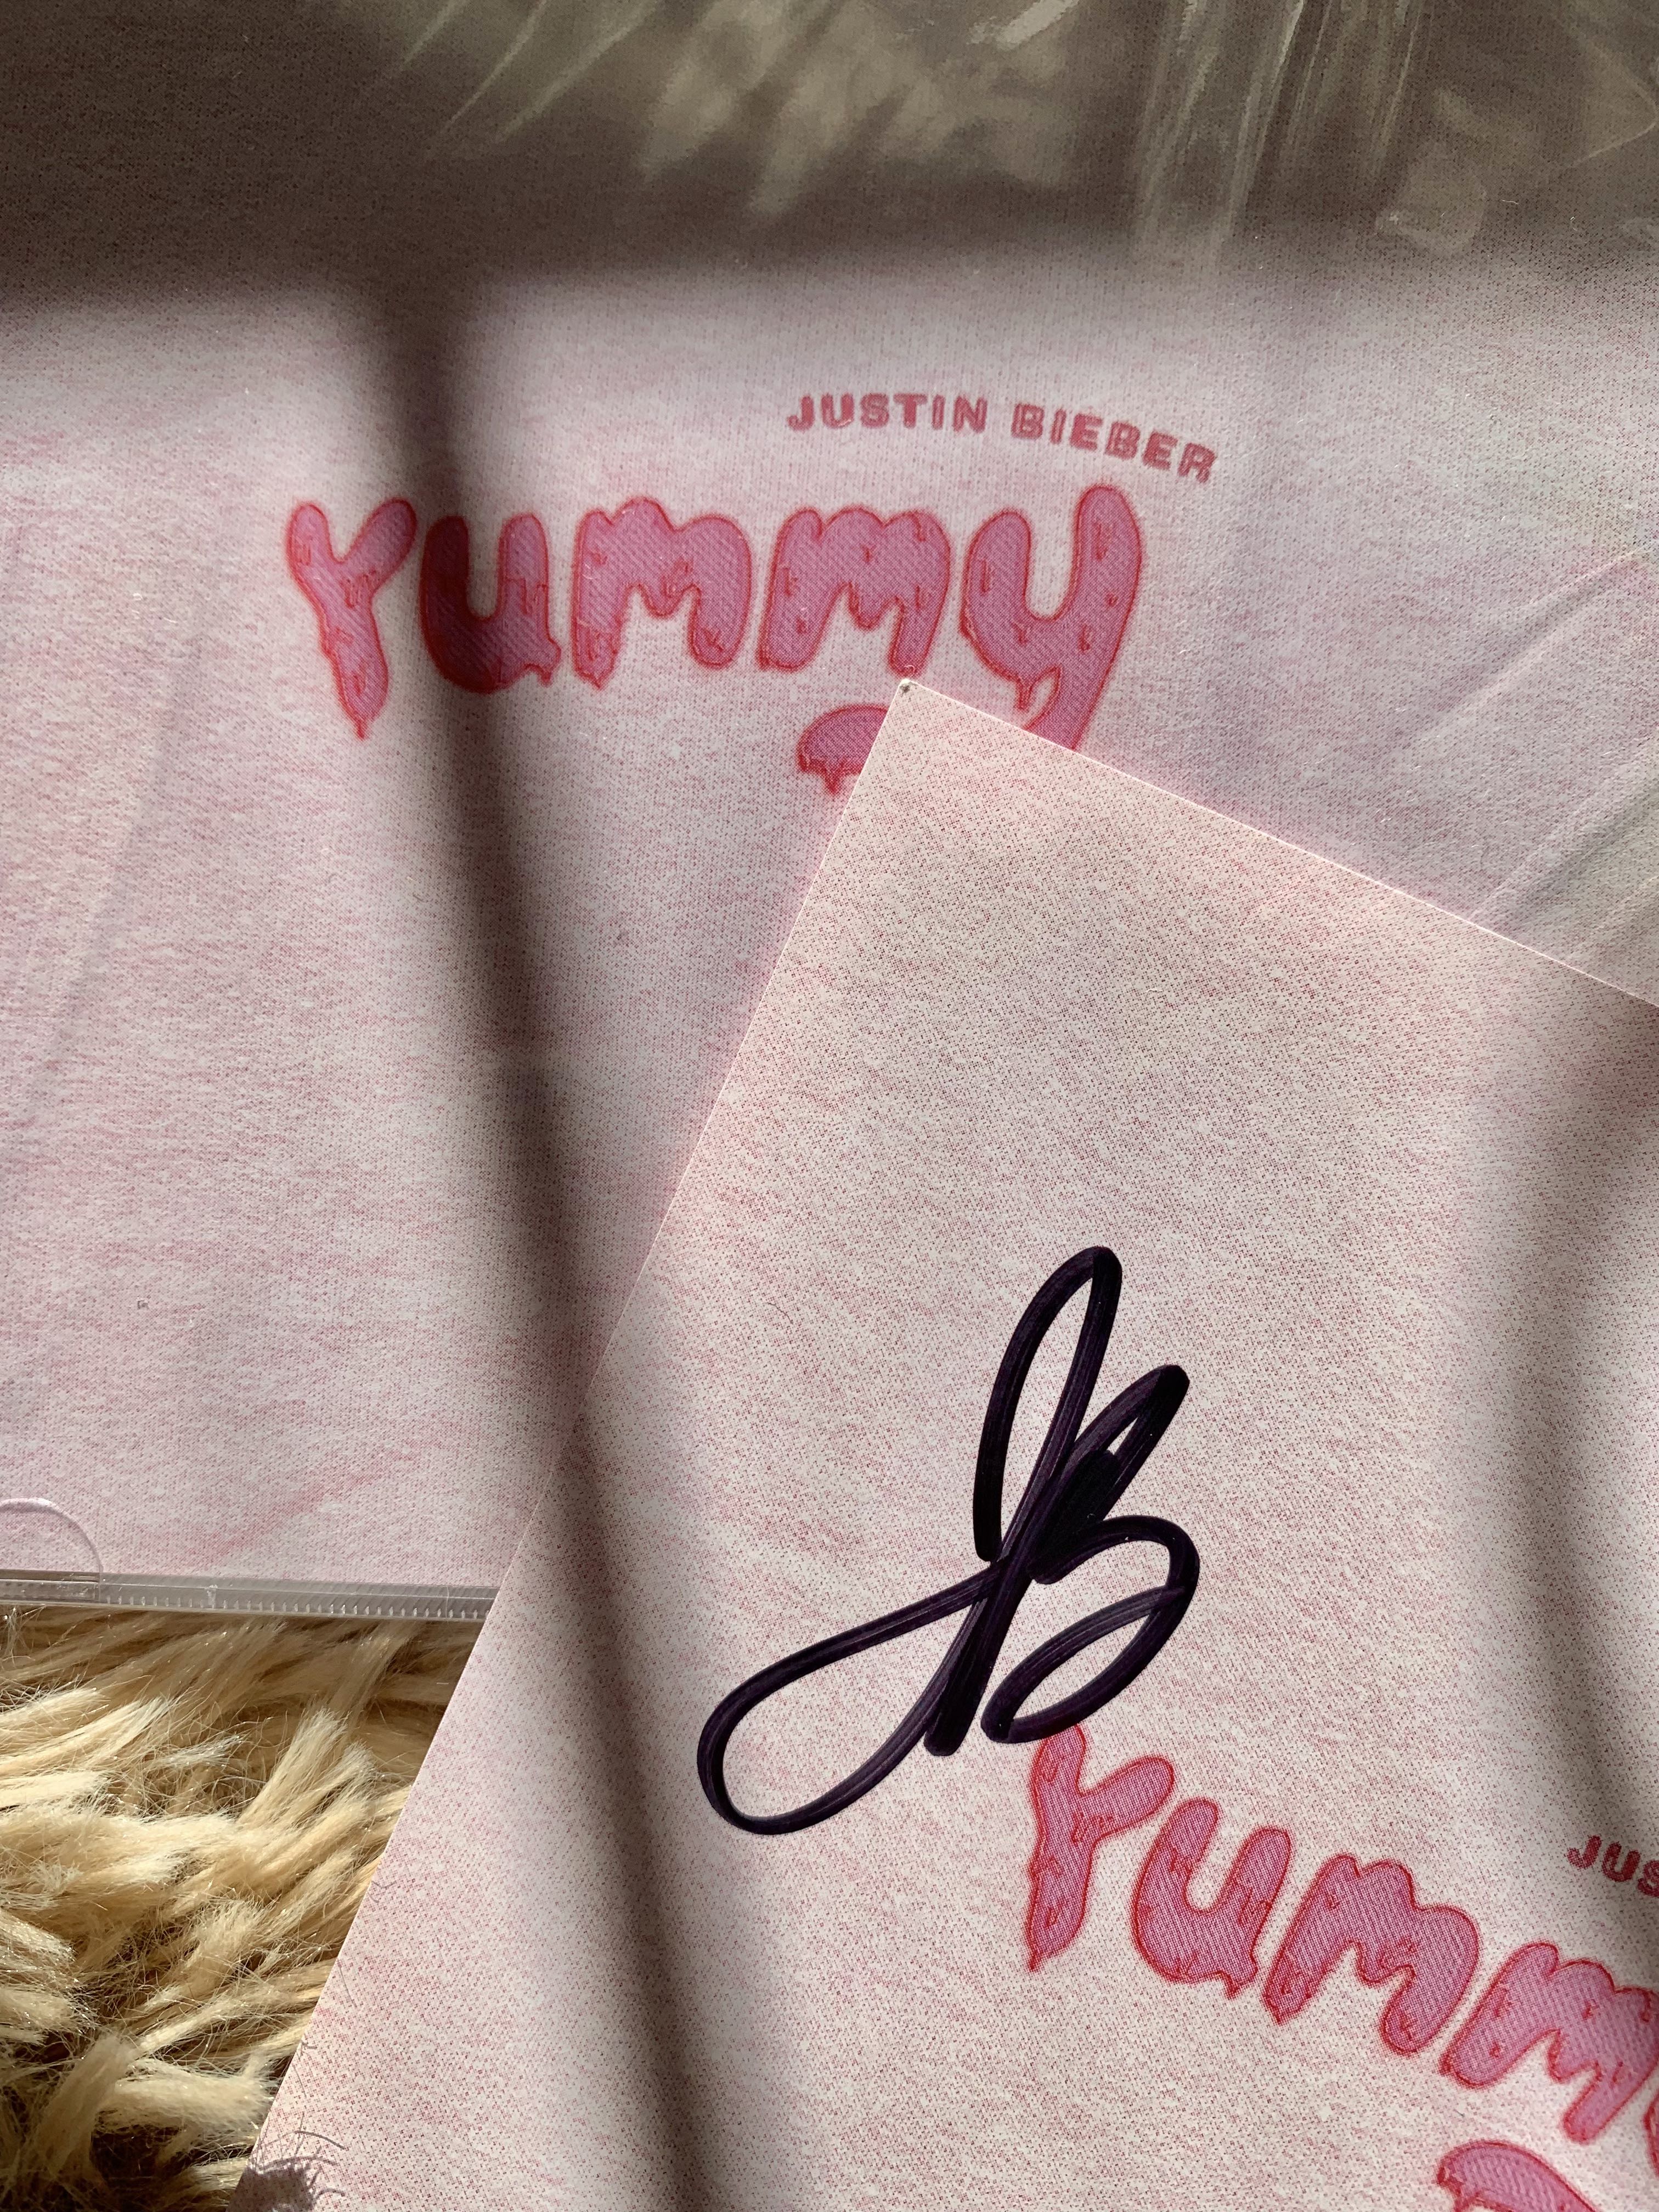 Justin Bieber Yummy サイン cd